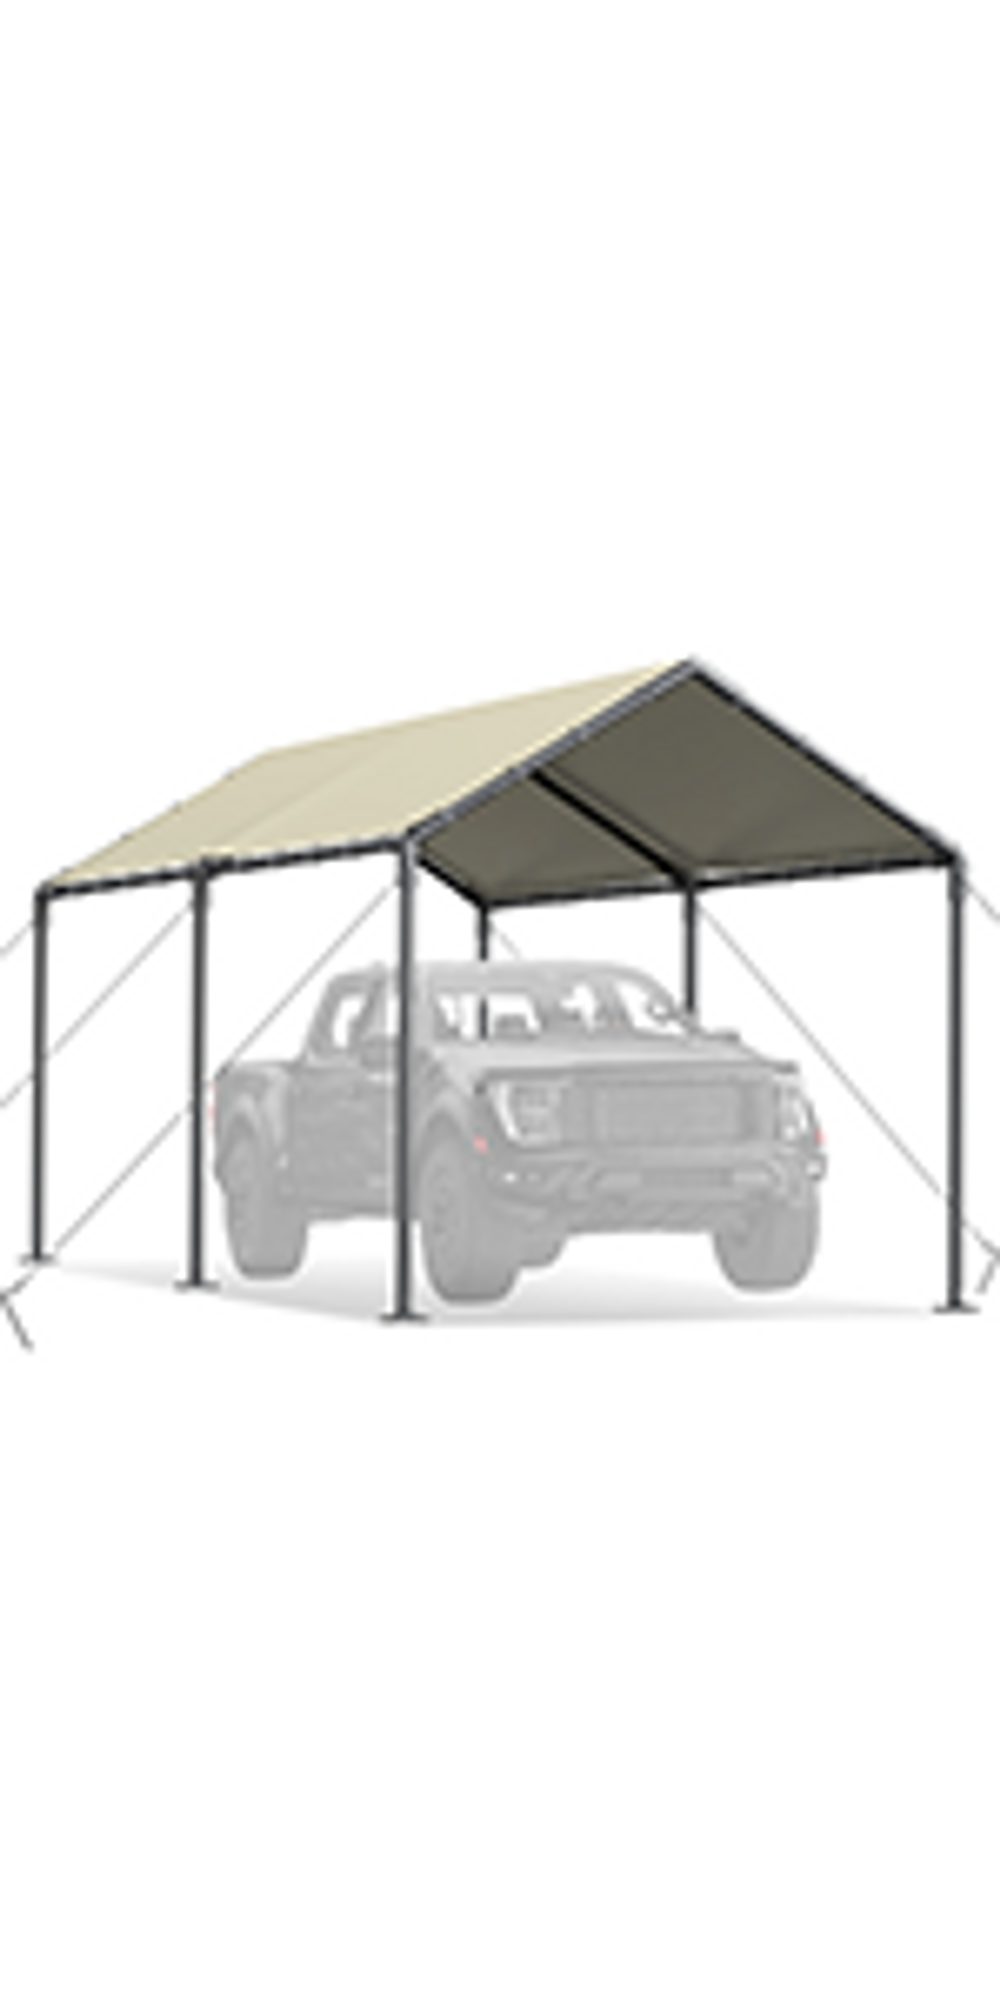 Grezone Carport L20xW10xH9.2Ft Heavy Duty Portable Garage Car Tent All Season UV Resistant Canopy